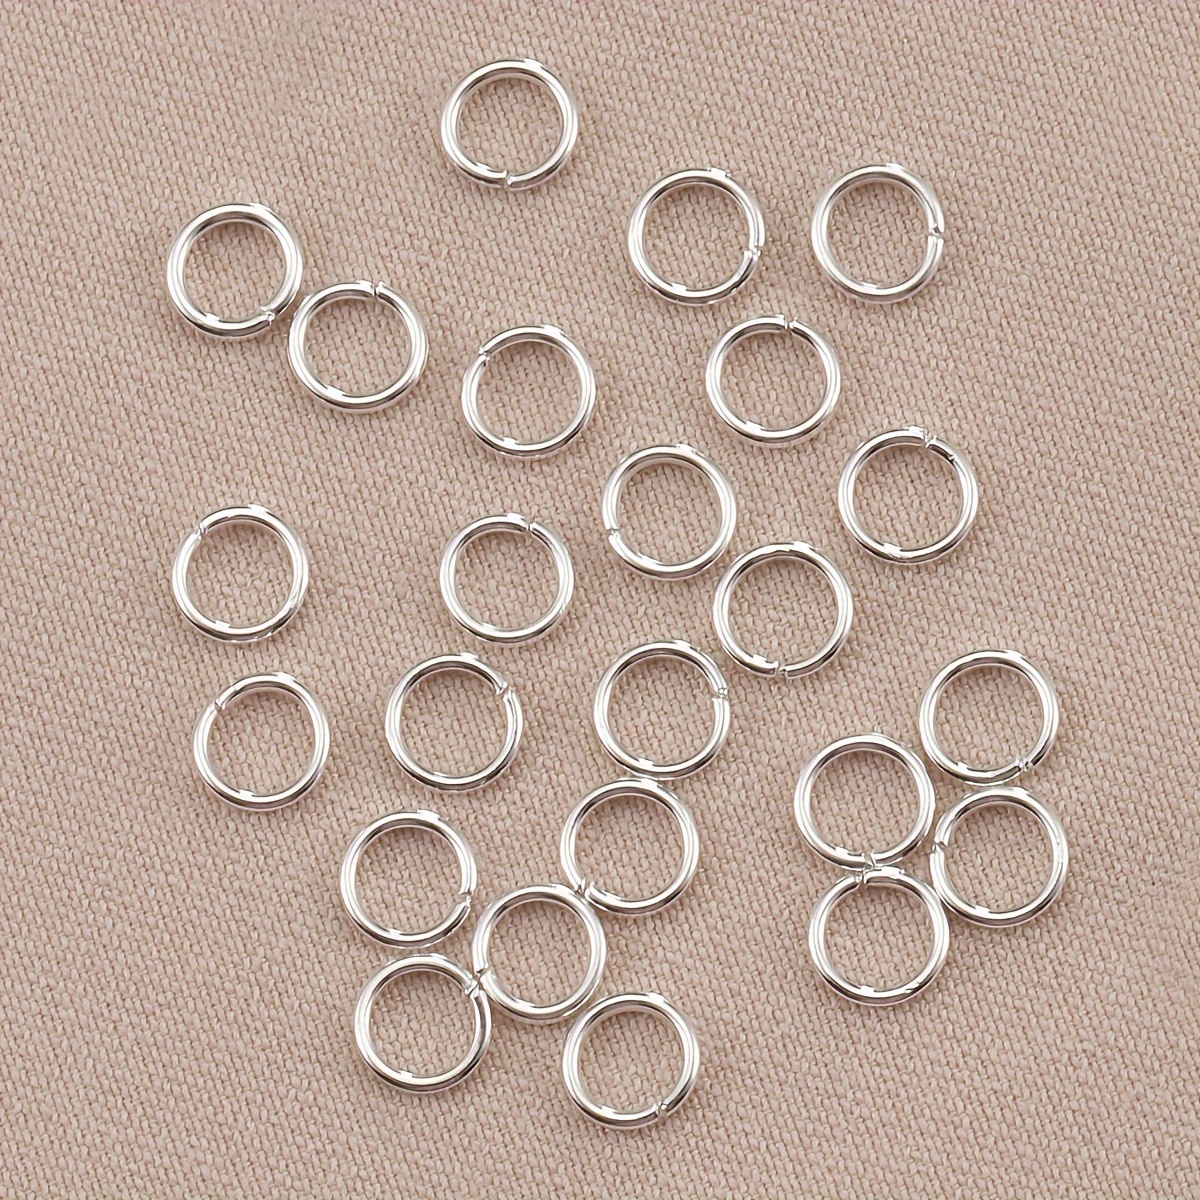 Single Loop Jump Rings Silver Plated Split Ring Jewelry Making Findings  50pcs Se